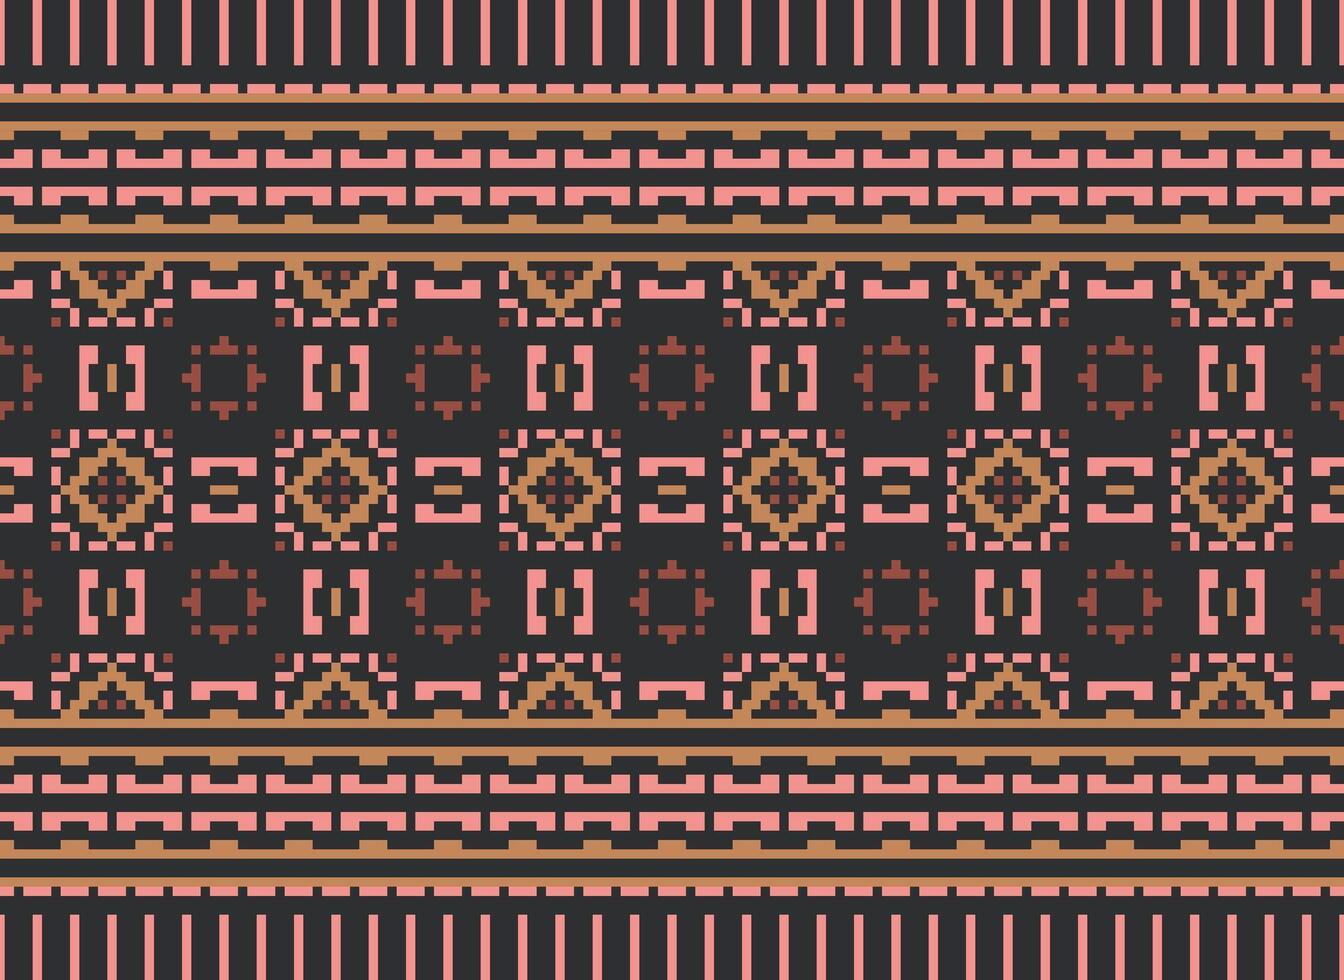 geometrisk etnisk mönster. pixel mönster. design för Kläder, tyg, bakgrund, tapet, omslag, batik. stickat, broderi stil. aztec geometrisk konst prydnad skriva ut. vektor illustration.